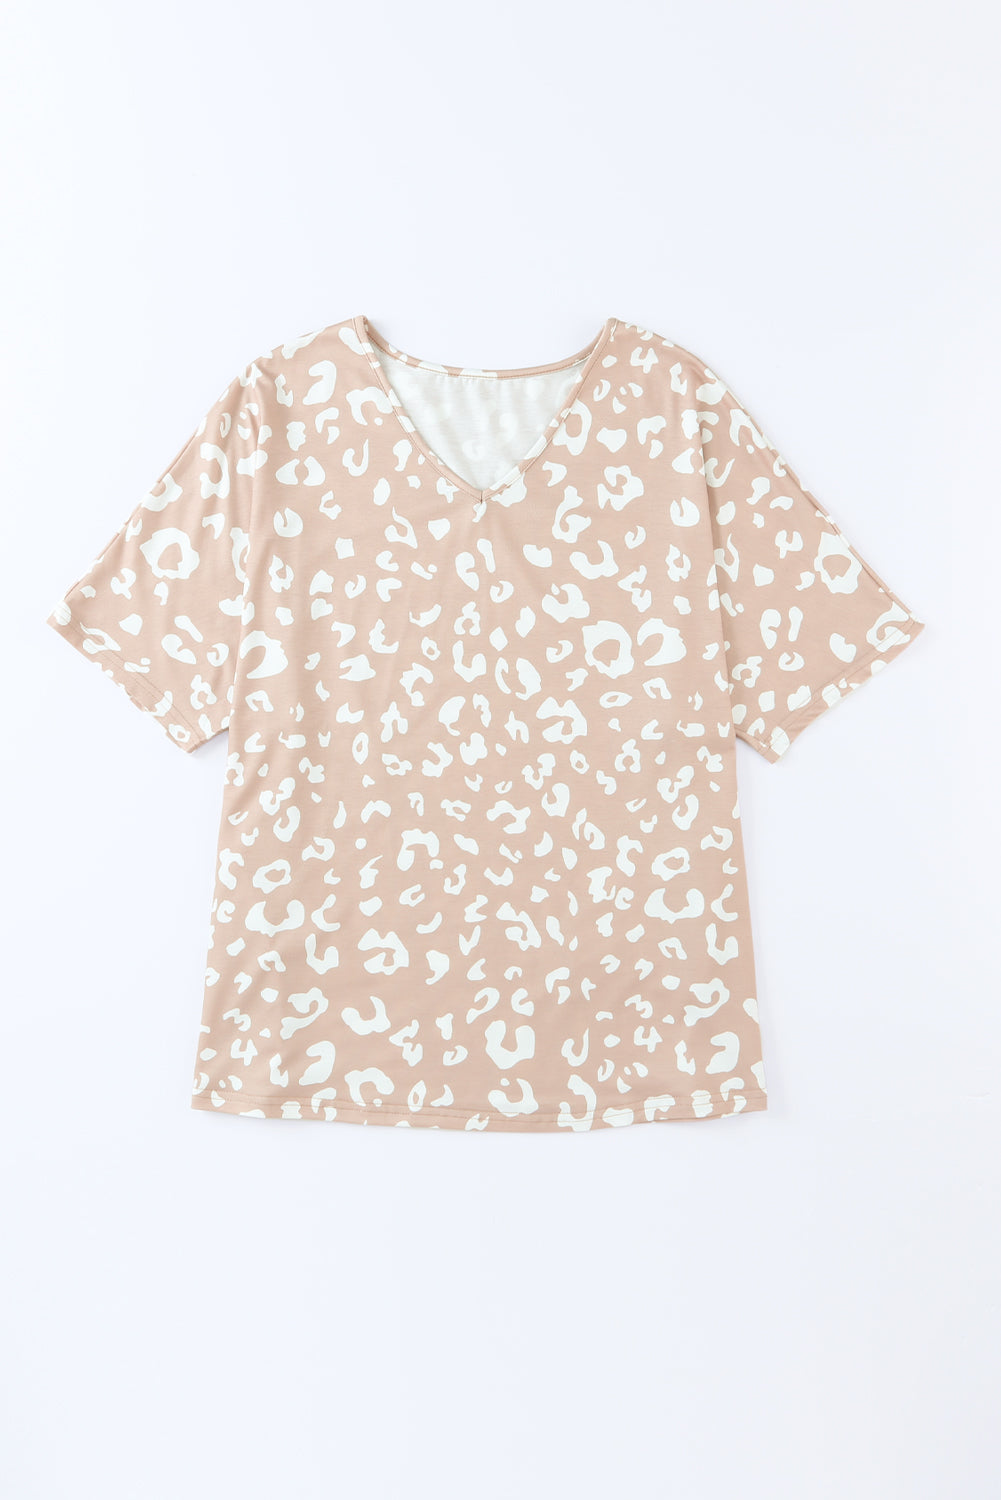 Aprikosenfarbenes, lockeres T-Shirt mit Leoparden-Spots-Print